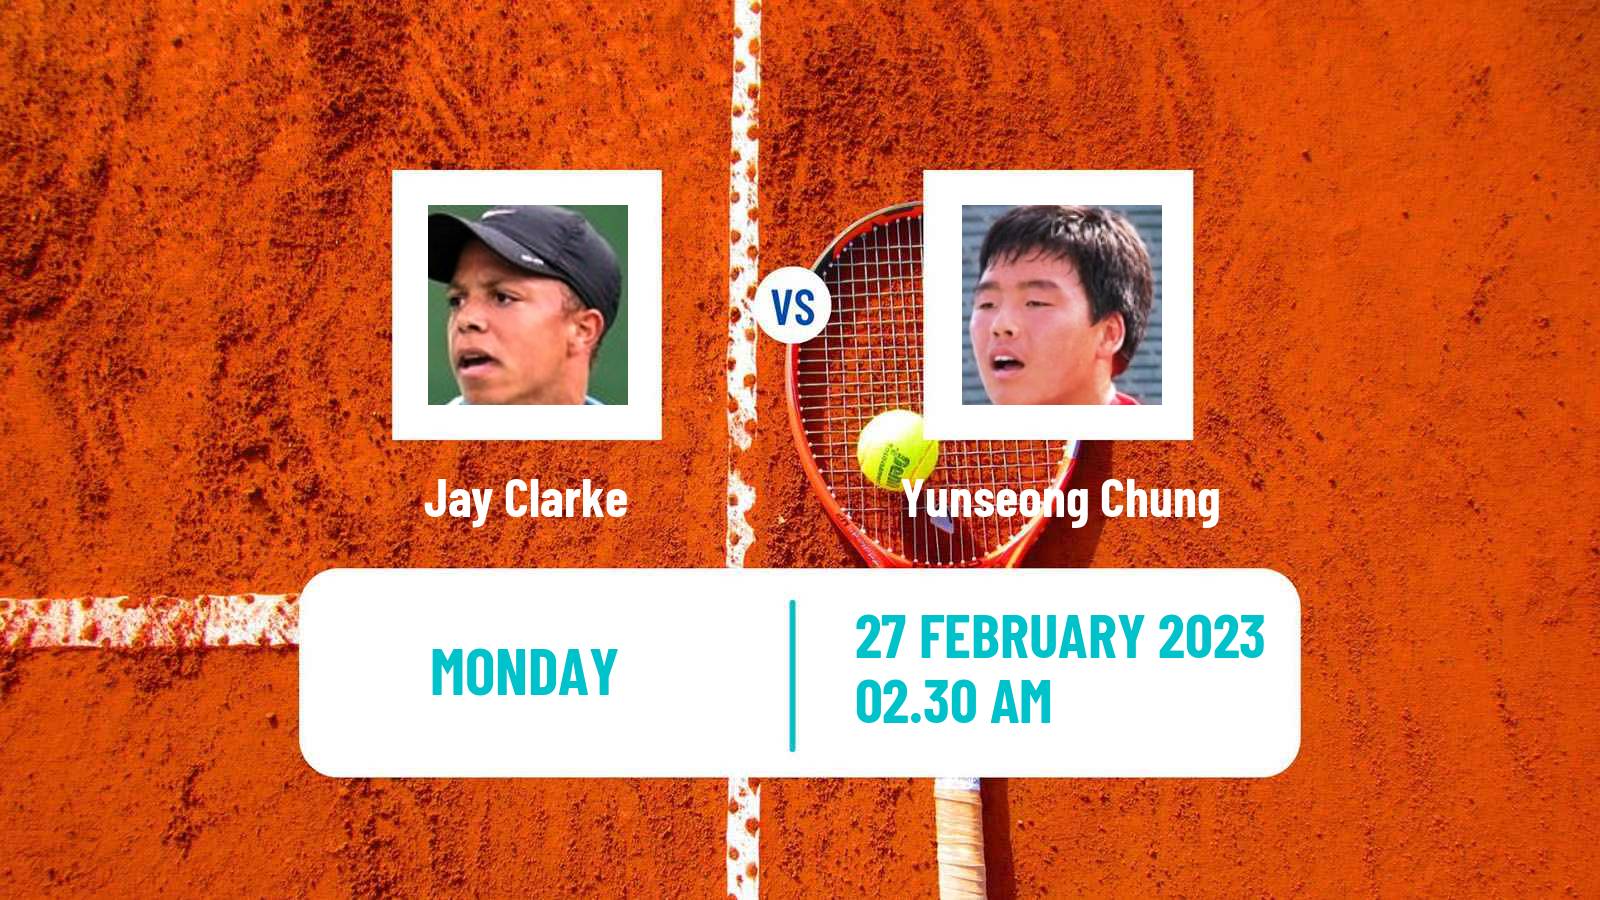 Tennis ATP Challenger Jay Clarke - Yunseong Chung